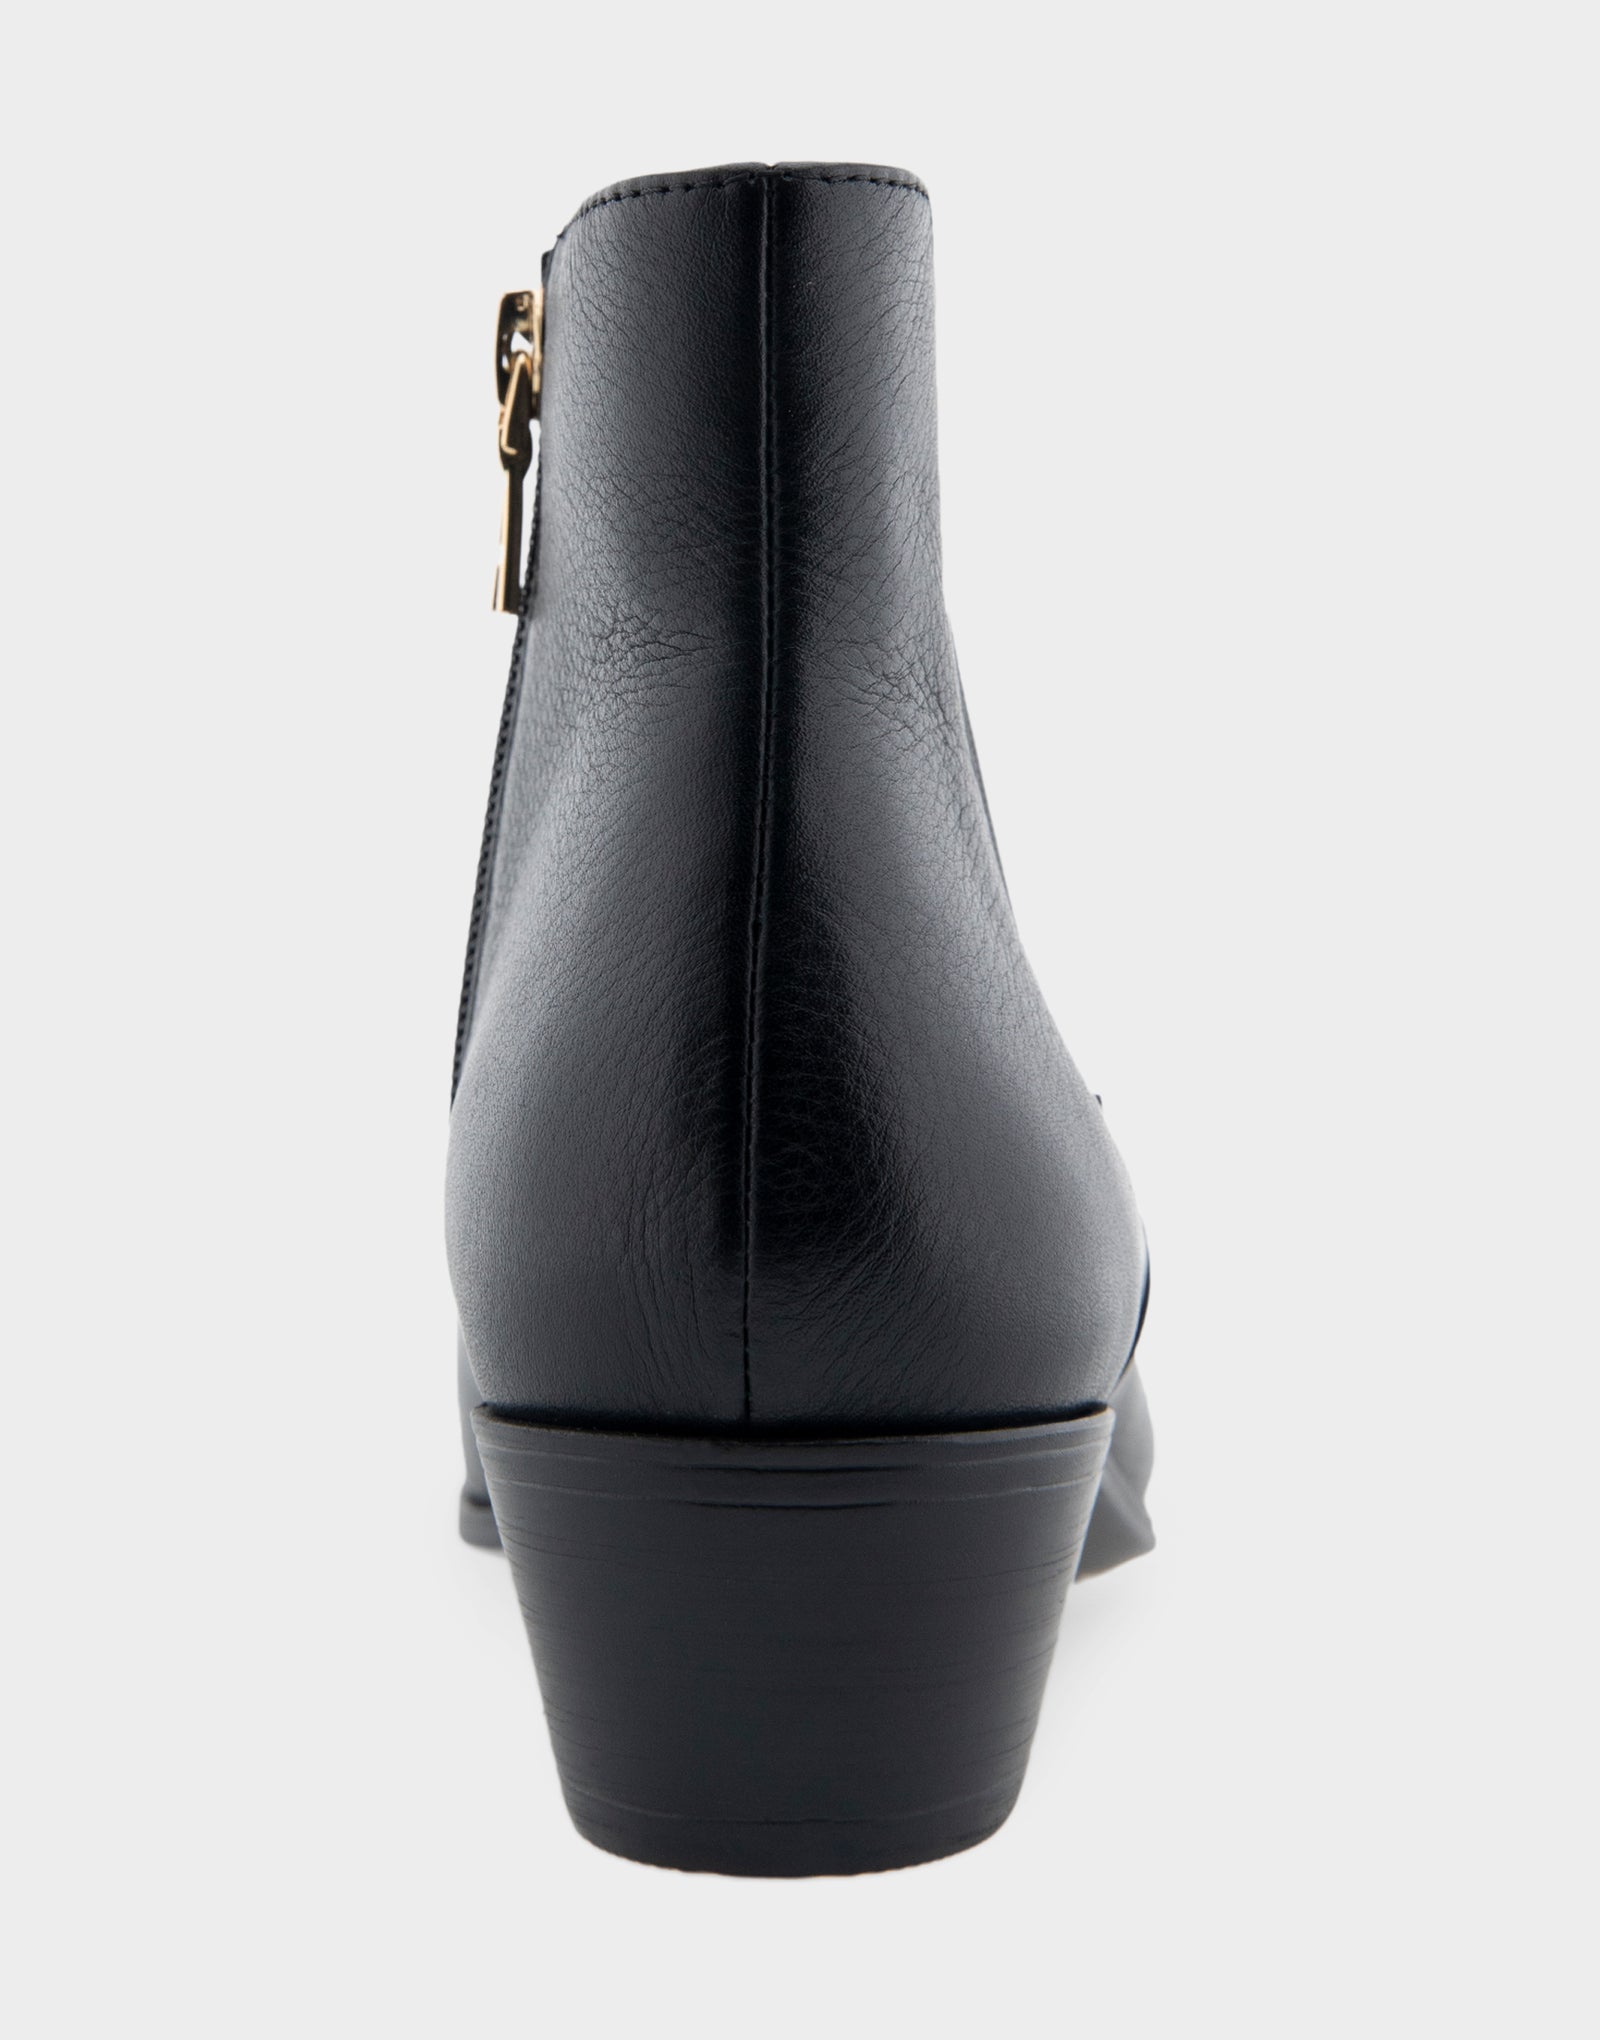 Women's Ankle Boot in Black